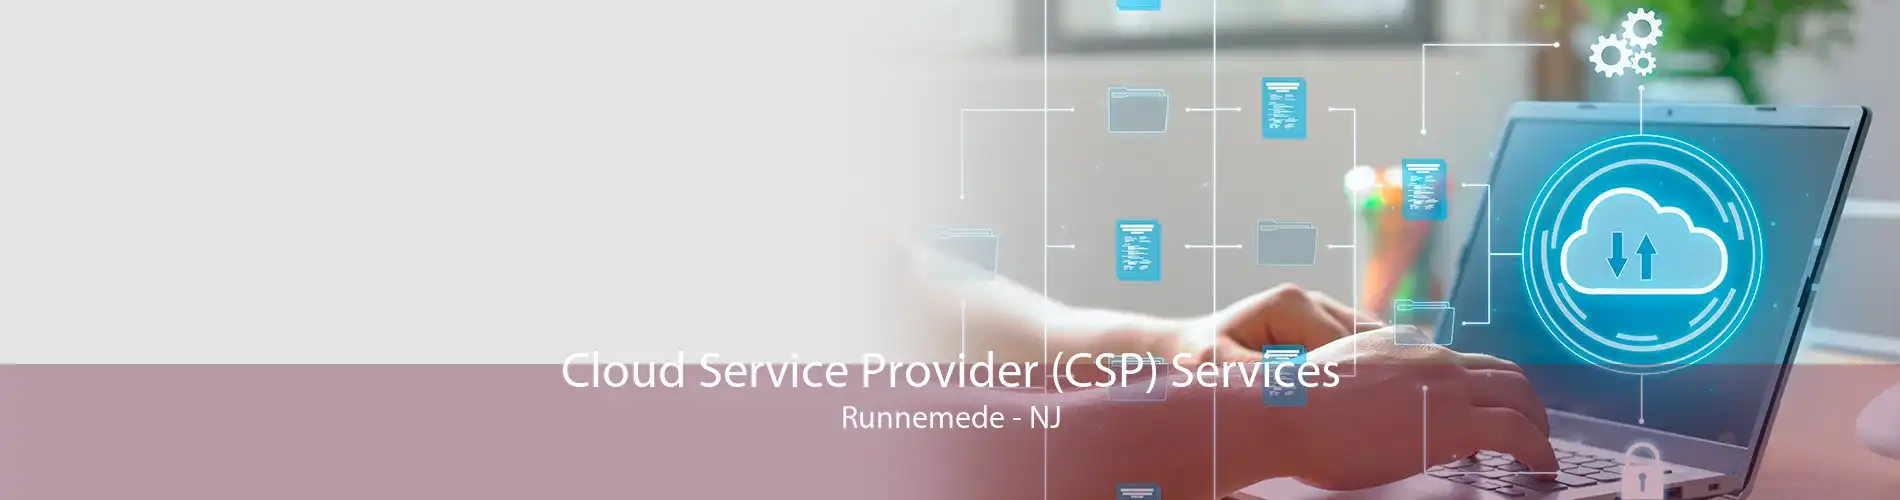 Cloud Service Provider (CSP) Services Runnemede - NJ